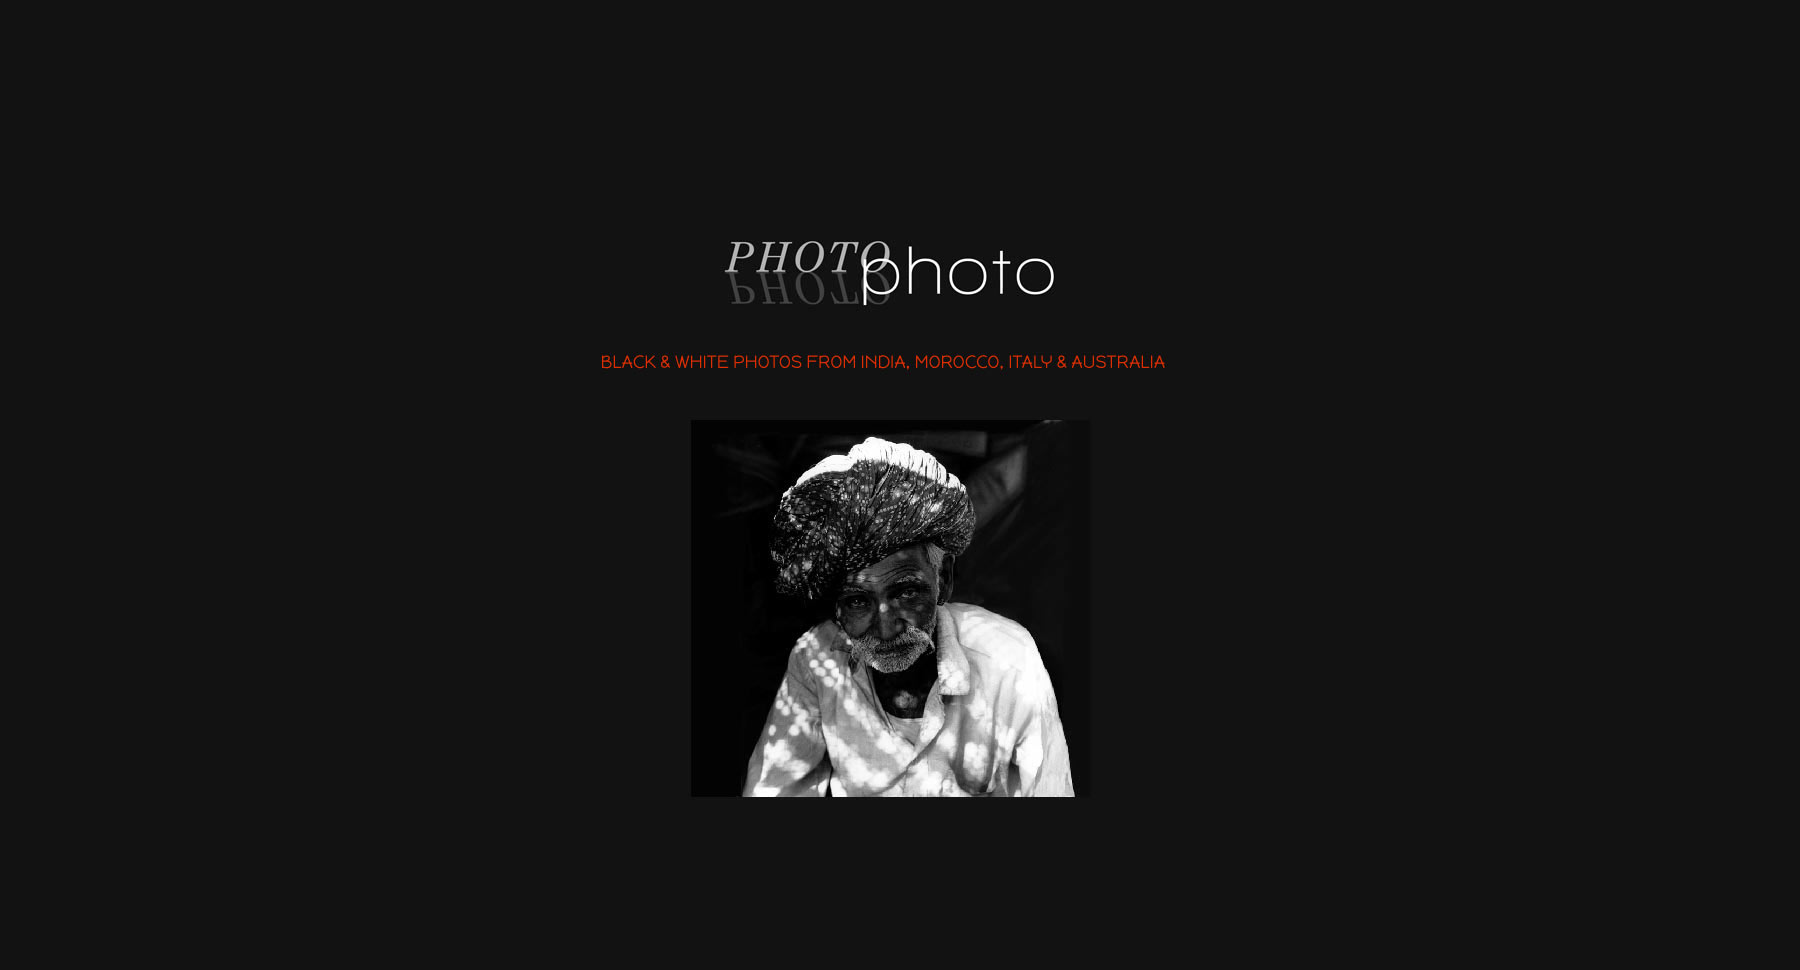 black & white photos from india, morocco, italy and australia